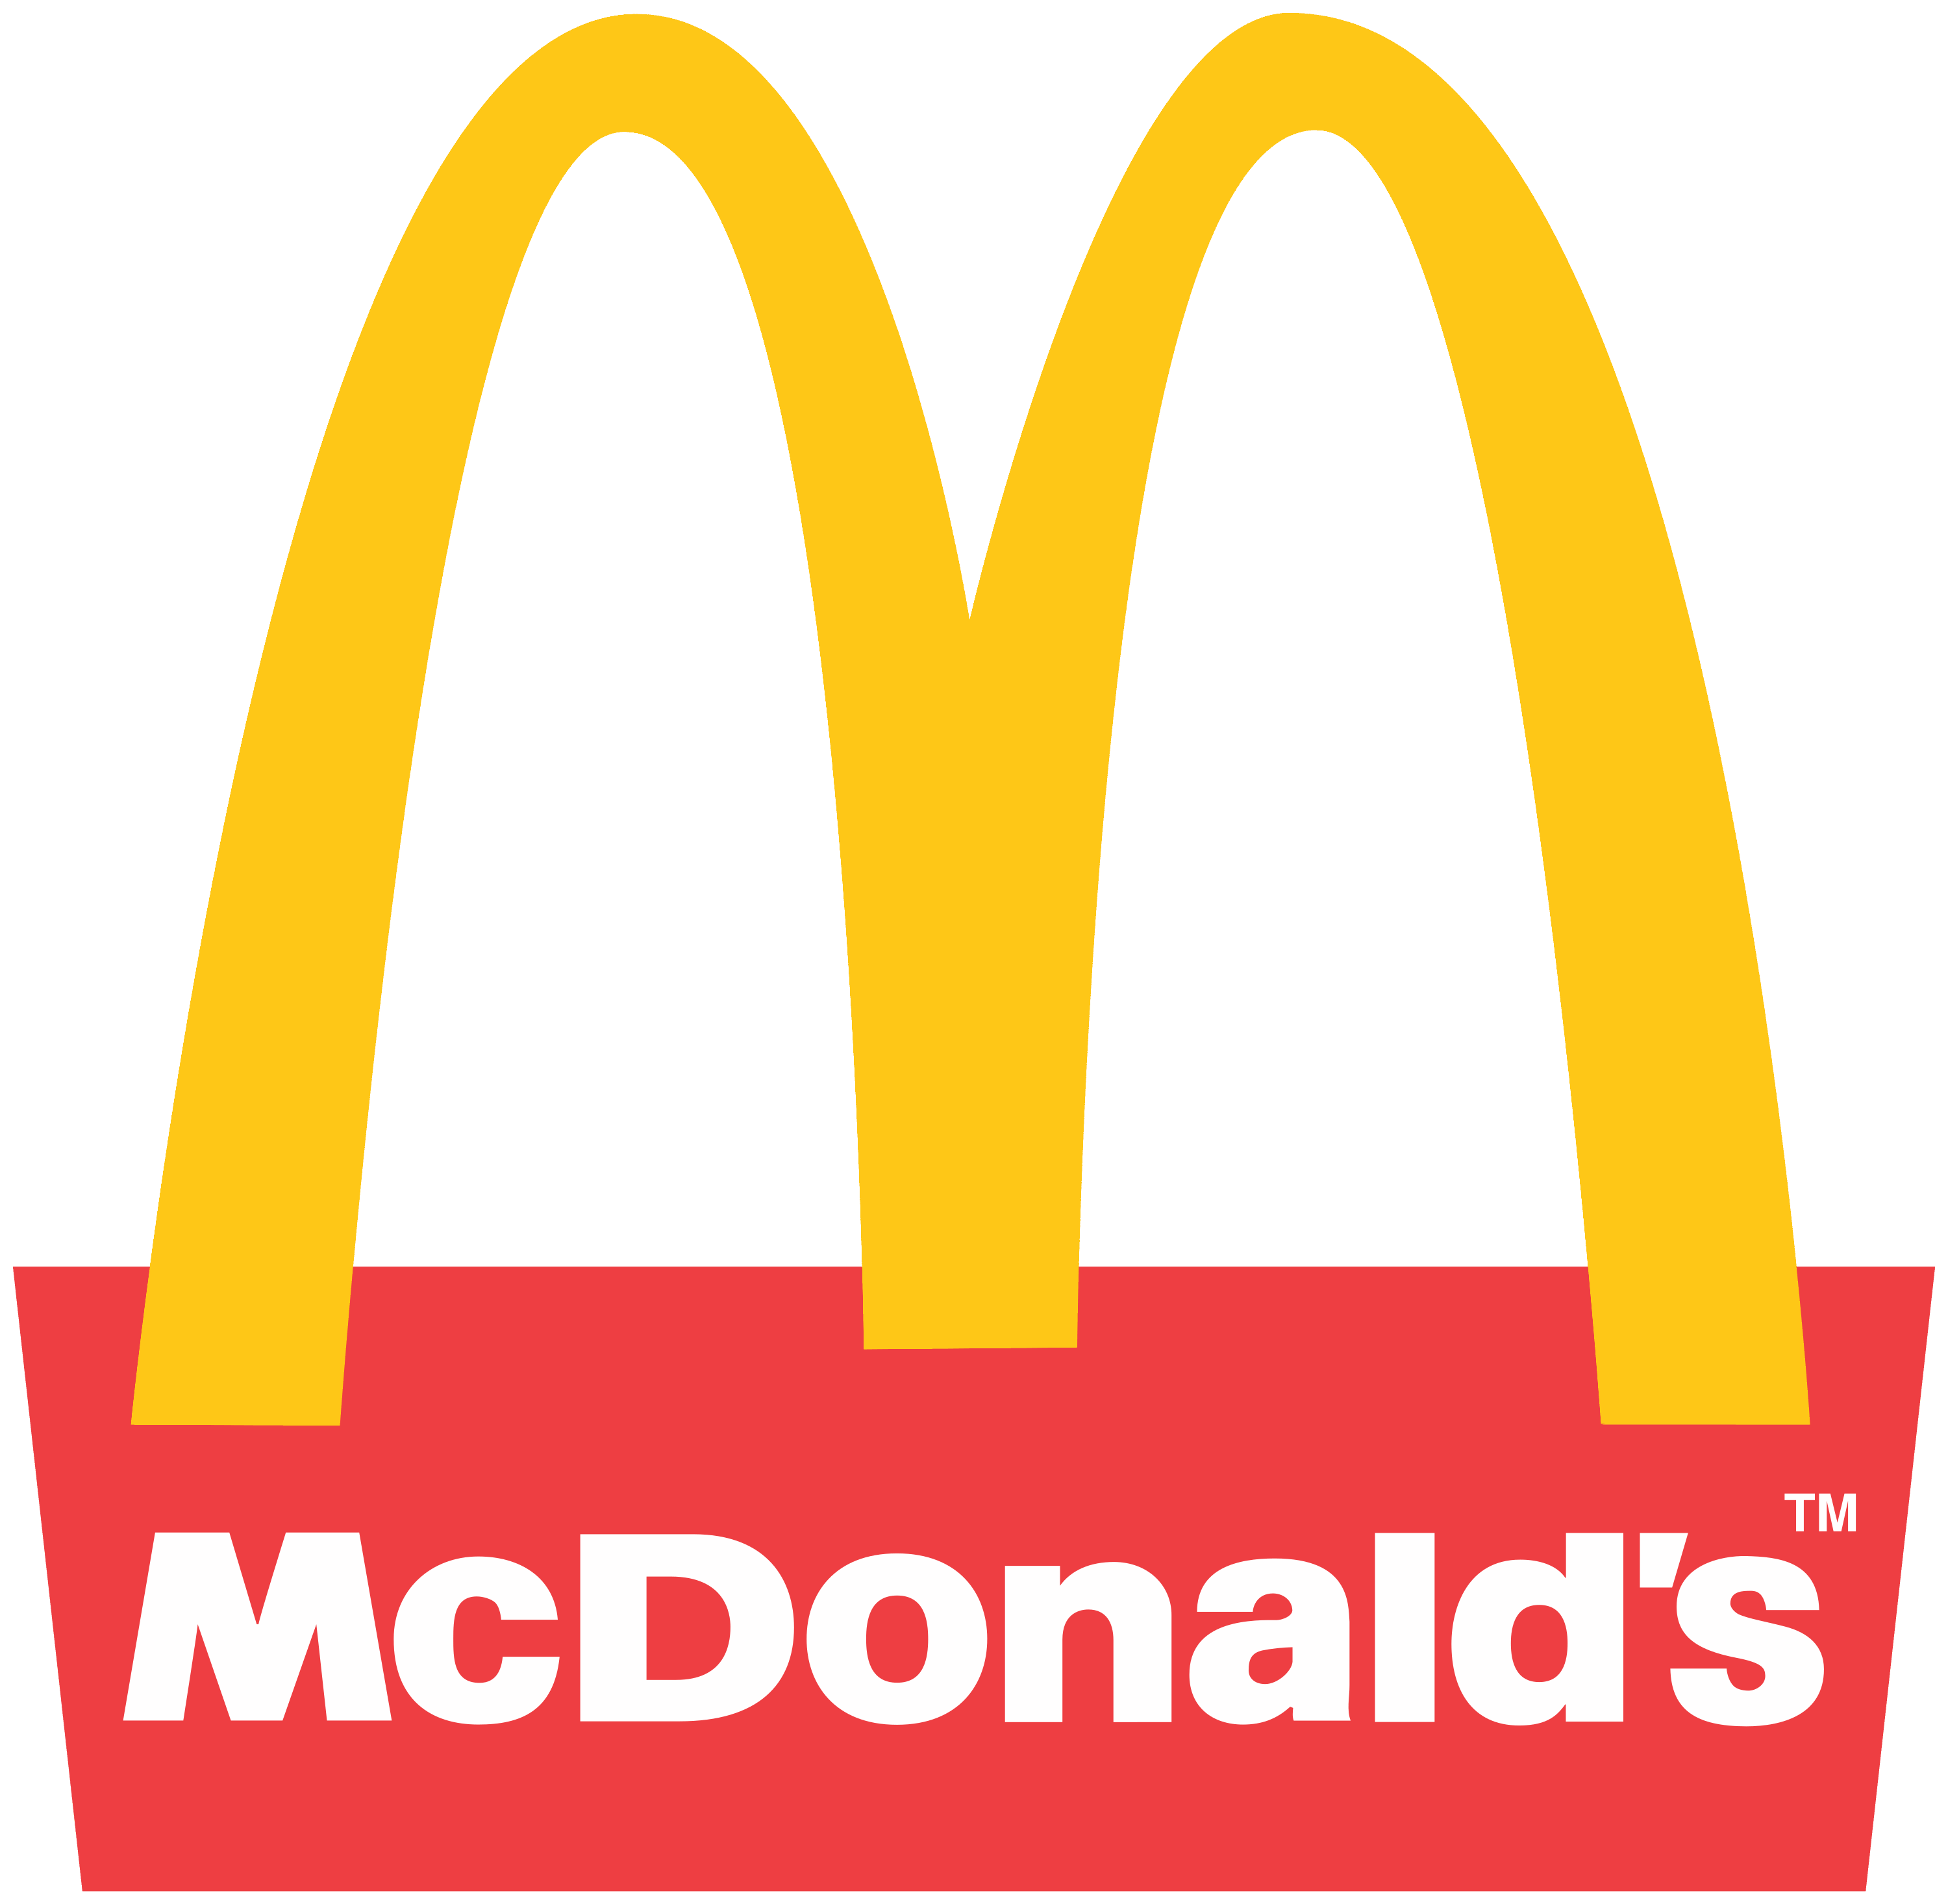 Mcdonalds clipart symbol, Mcdonalds symbol Transparent FREE for ...